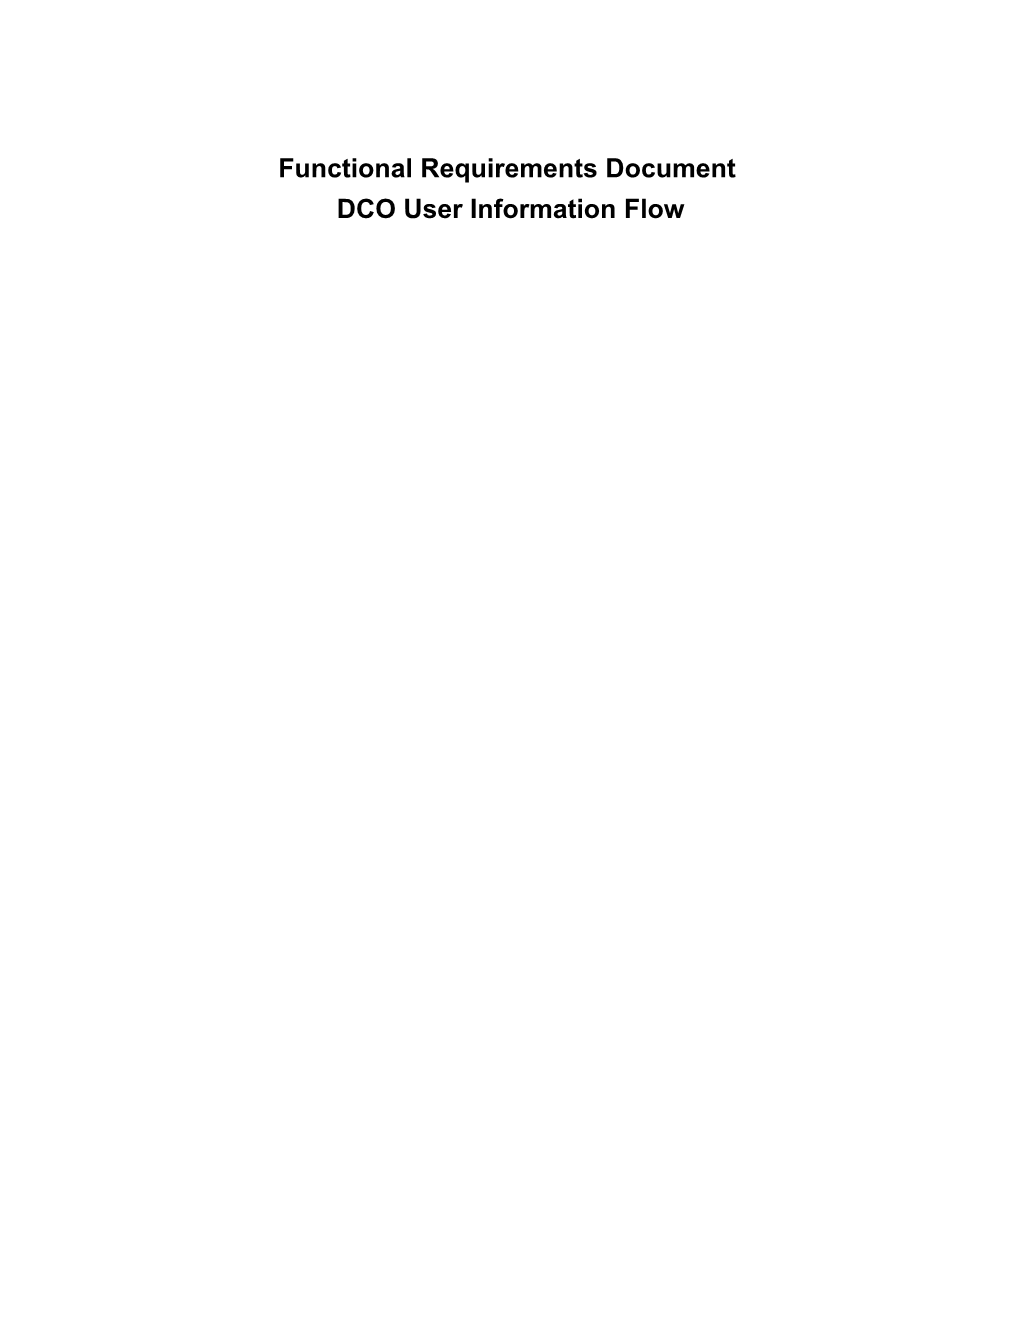 DCO User Information Flow